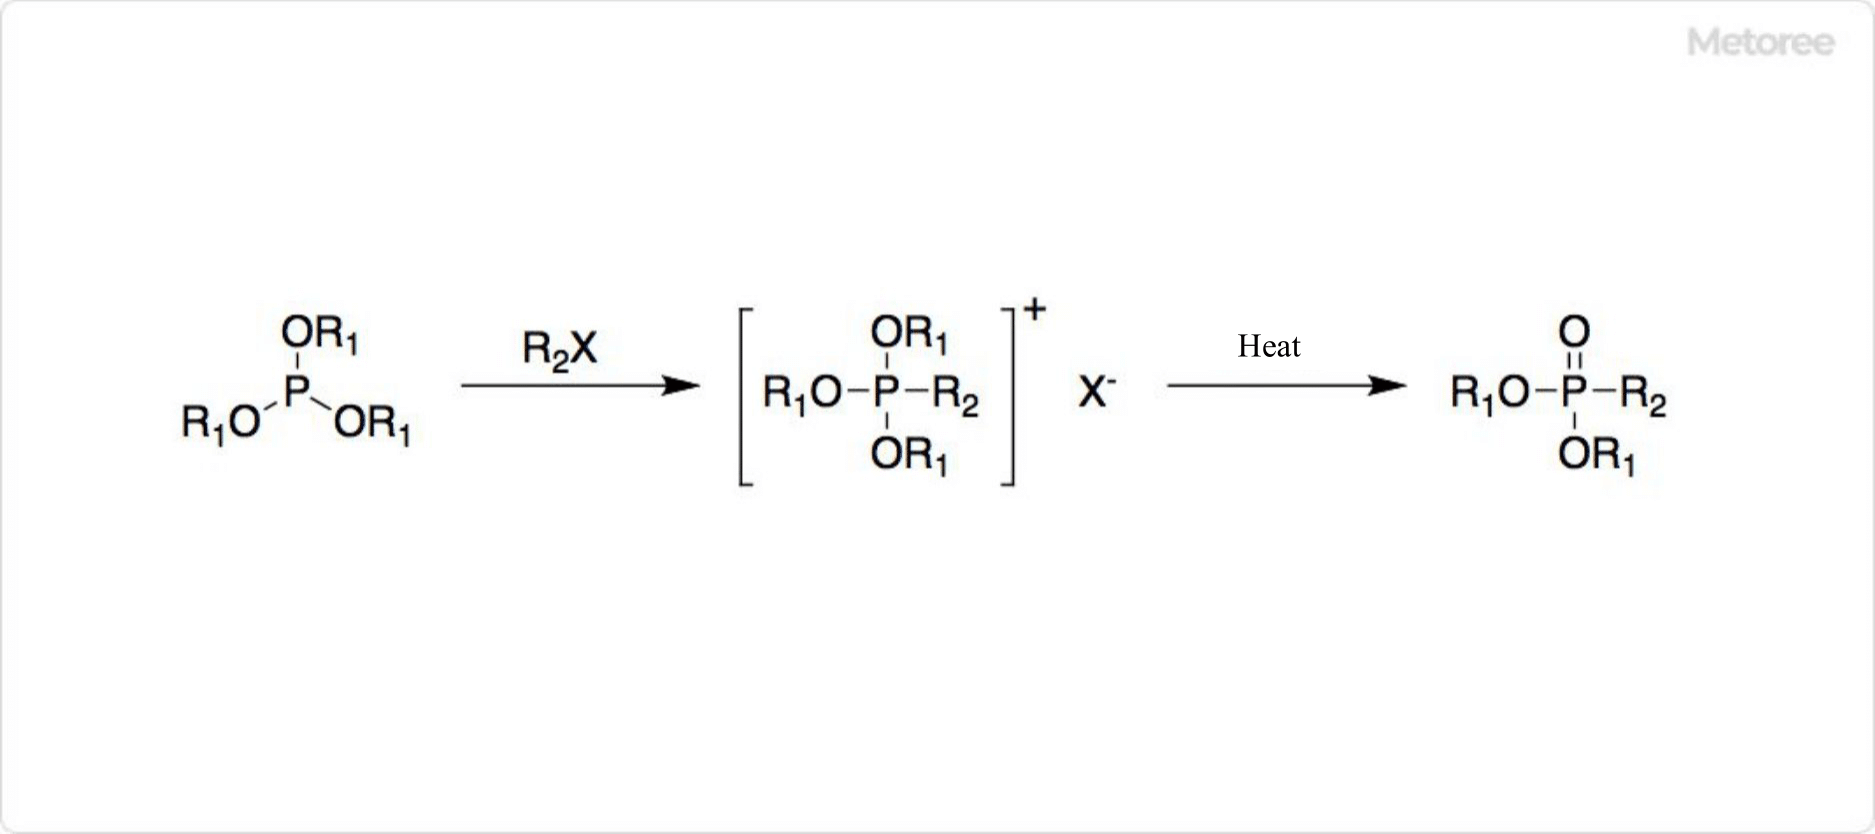 Synthesis of Organic Phosphonic Acid